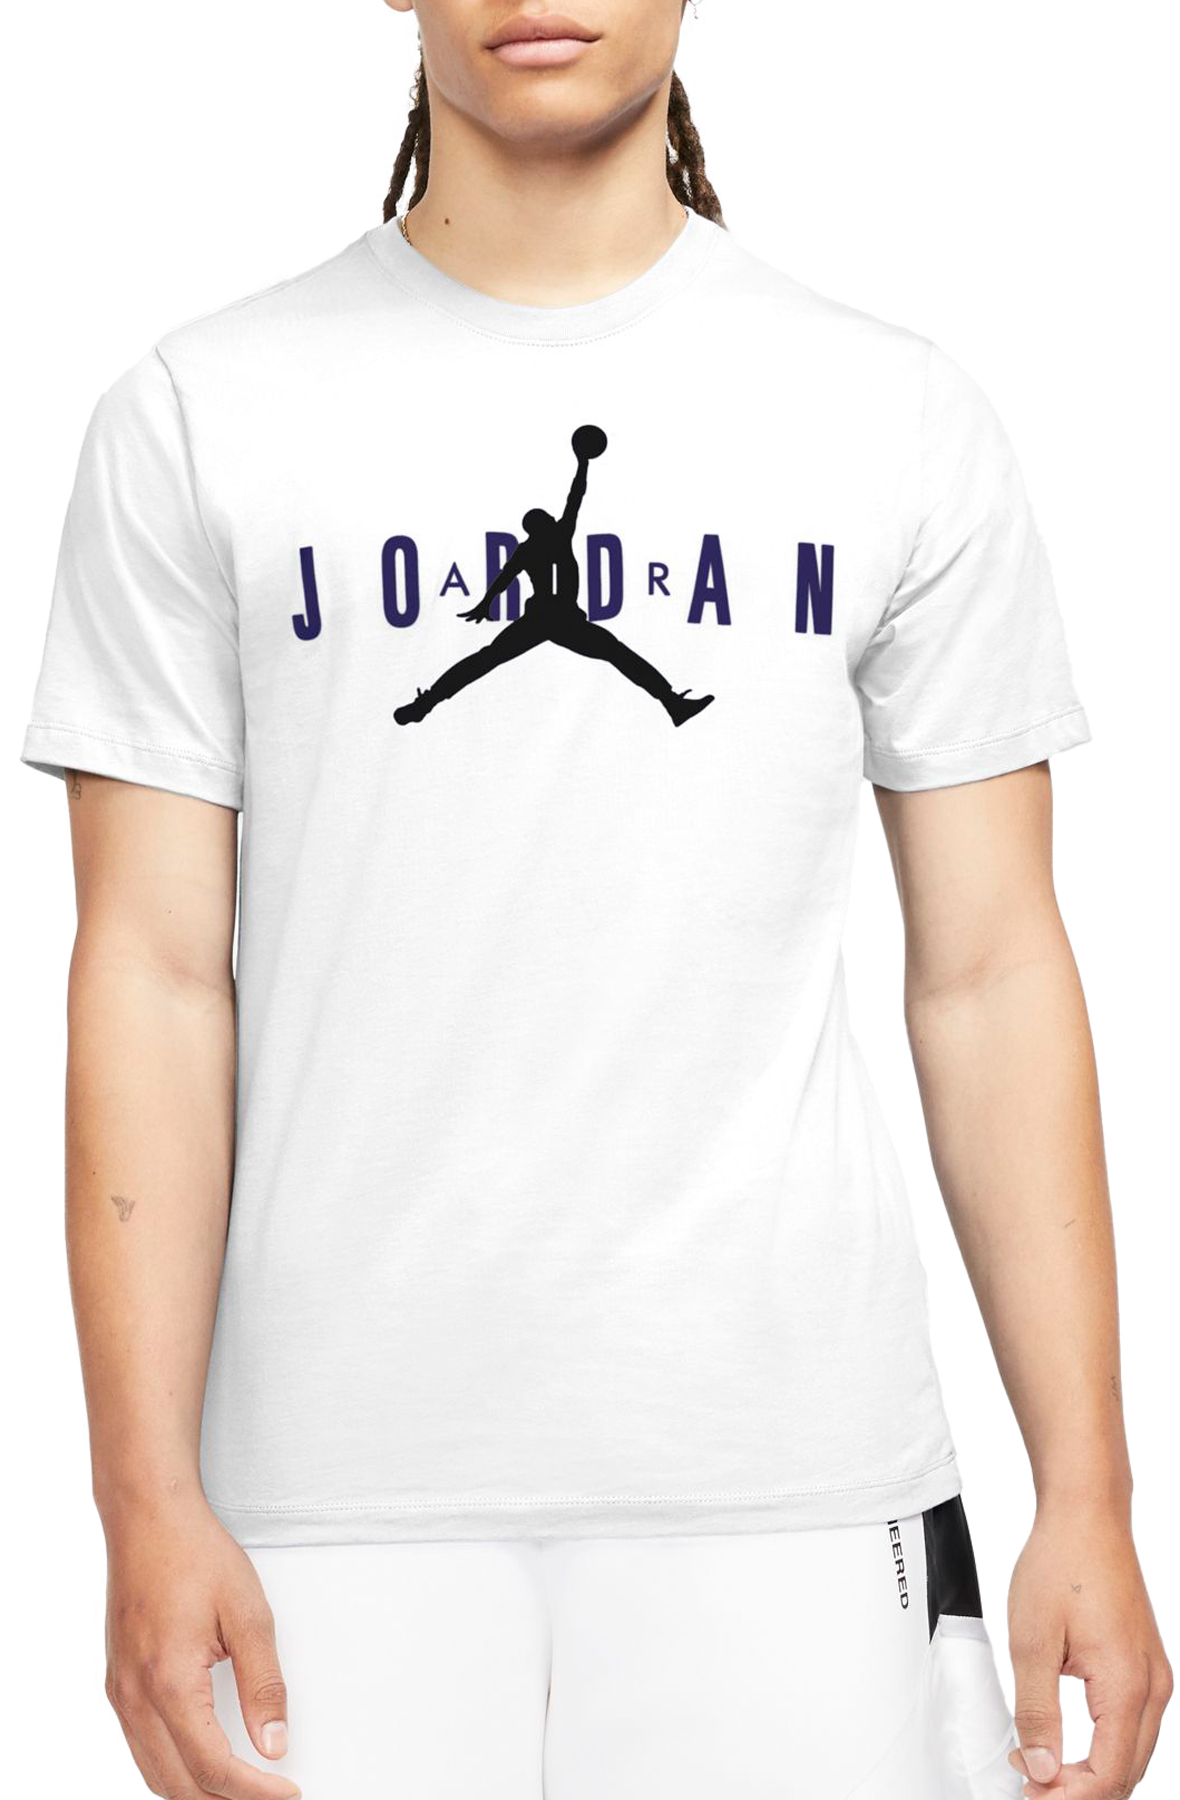 black and white jordan shirt